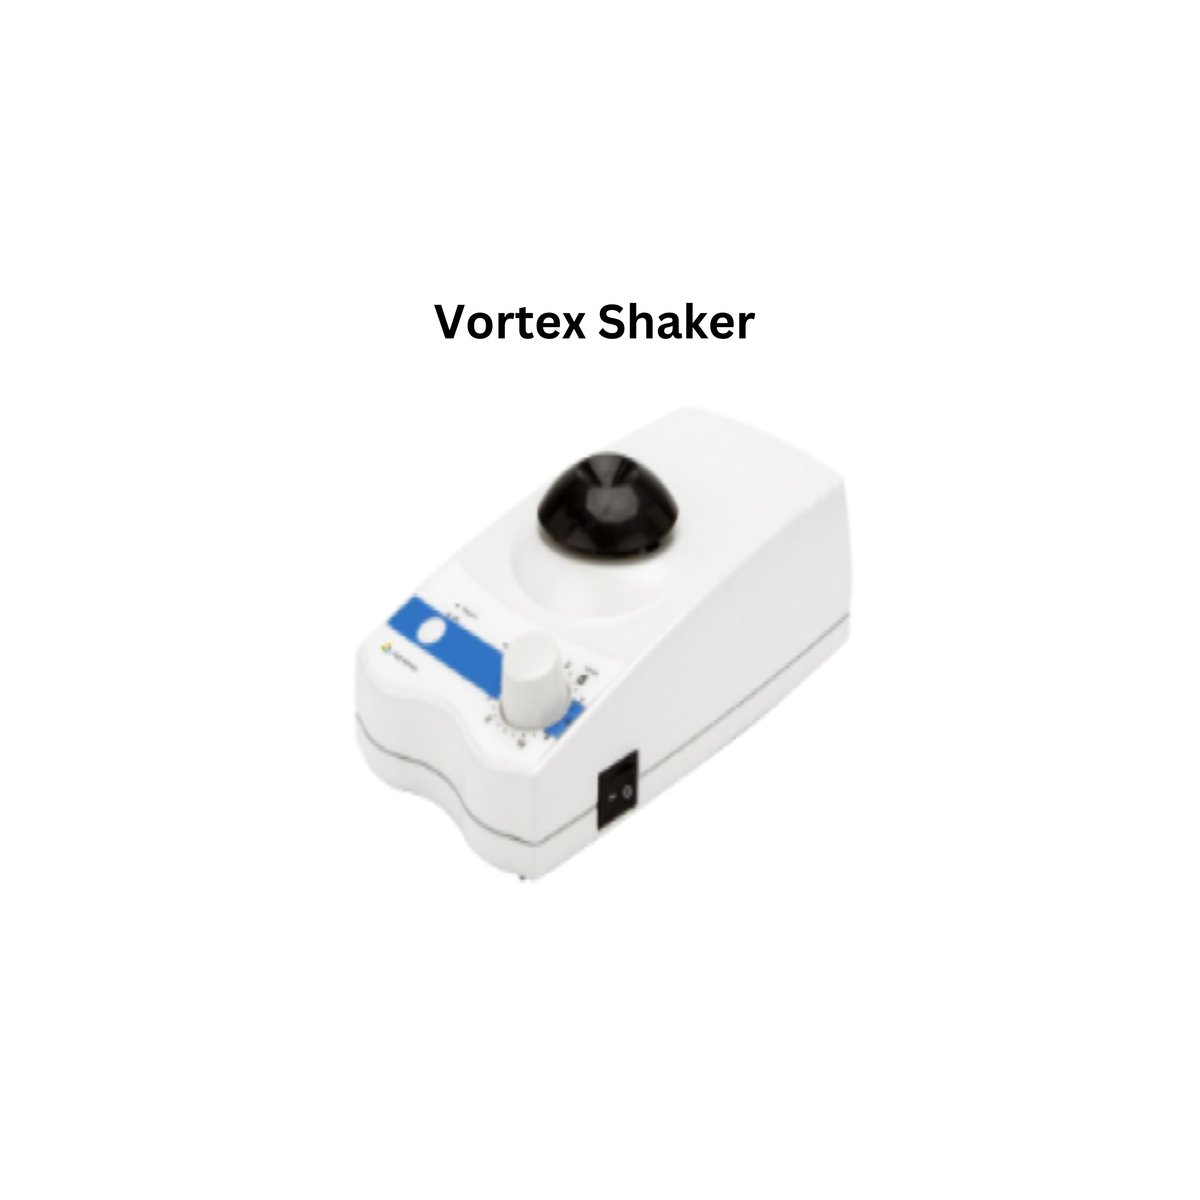 Vortex Shaker .jpg